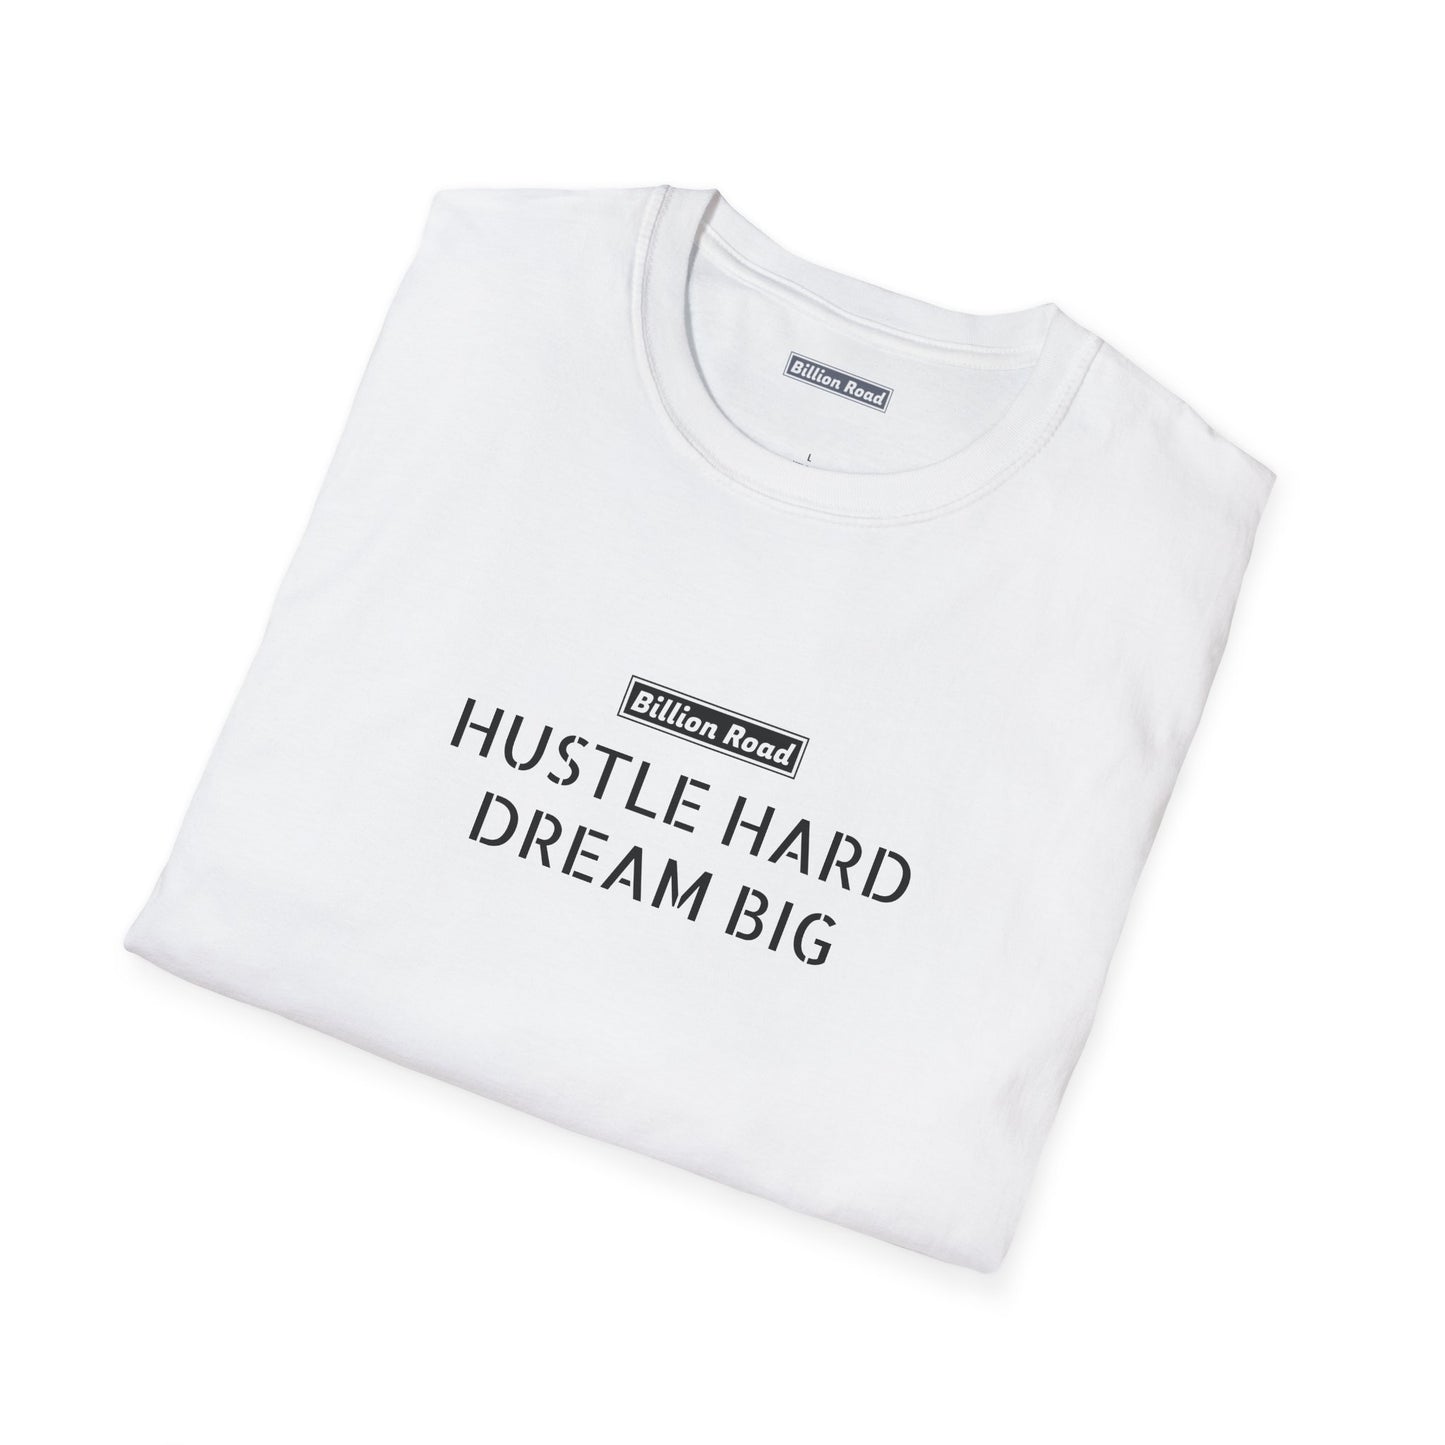 Hustle Hard, Dream Big Tee